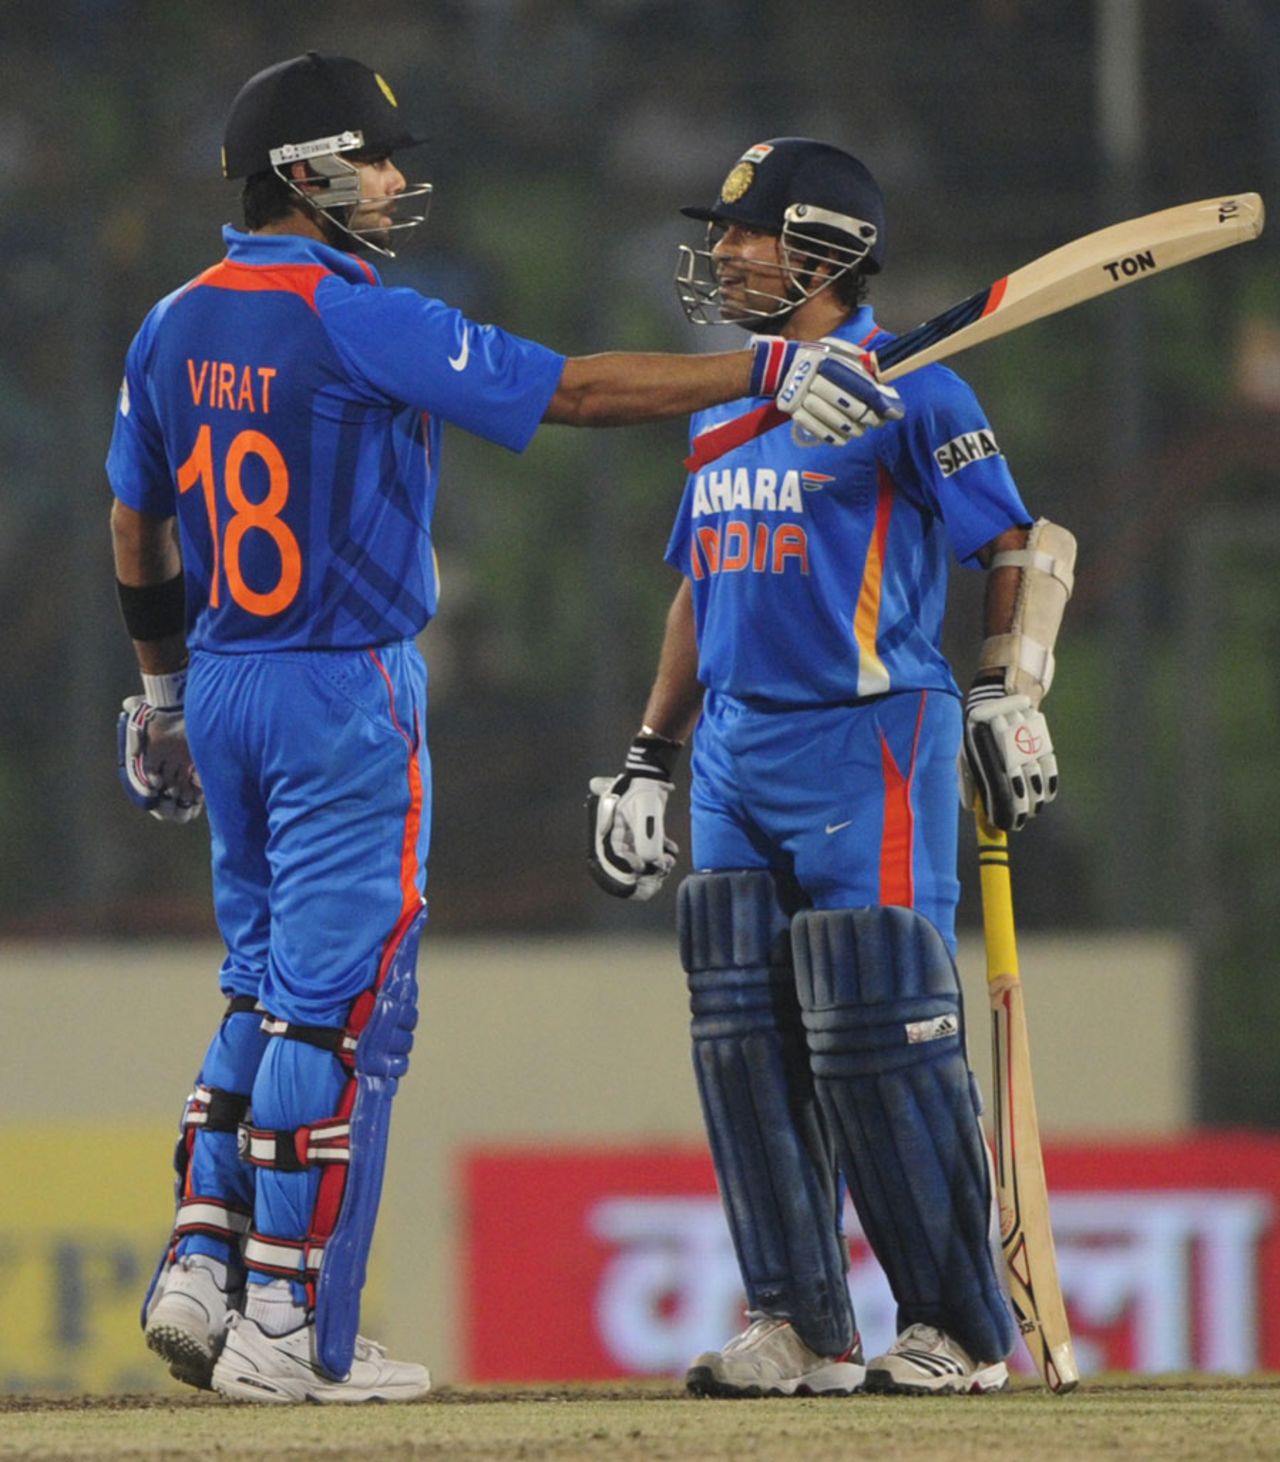 Virat Kohli raises his bat after reaching his half-century, India v Pakistan, Asia Cup, Mirpur, March 18, 2012